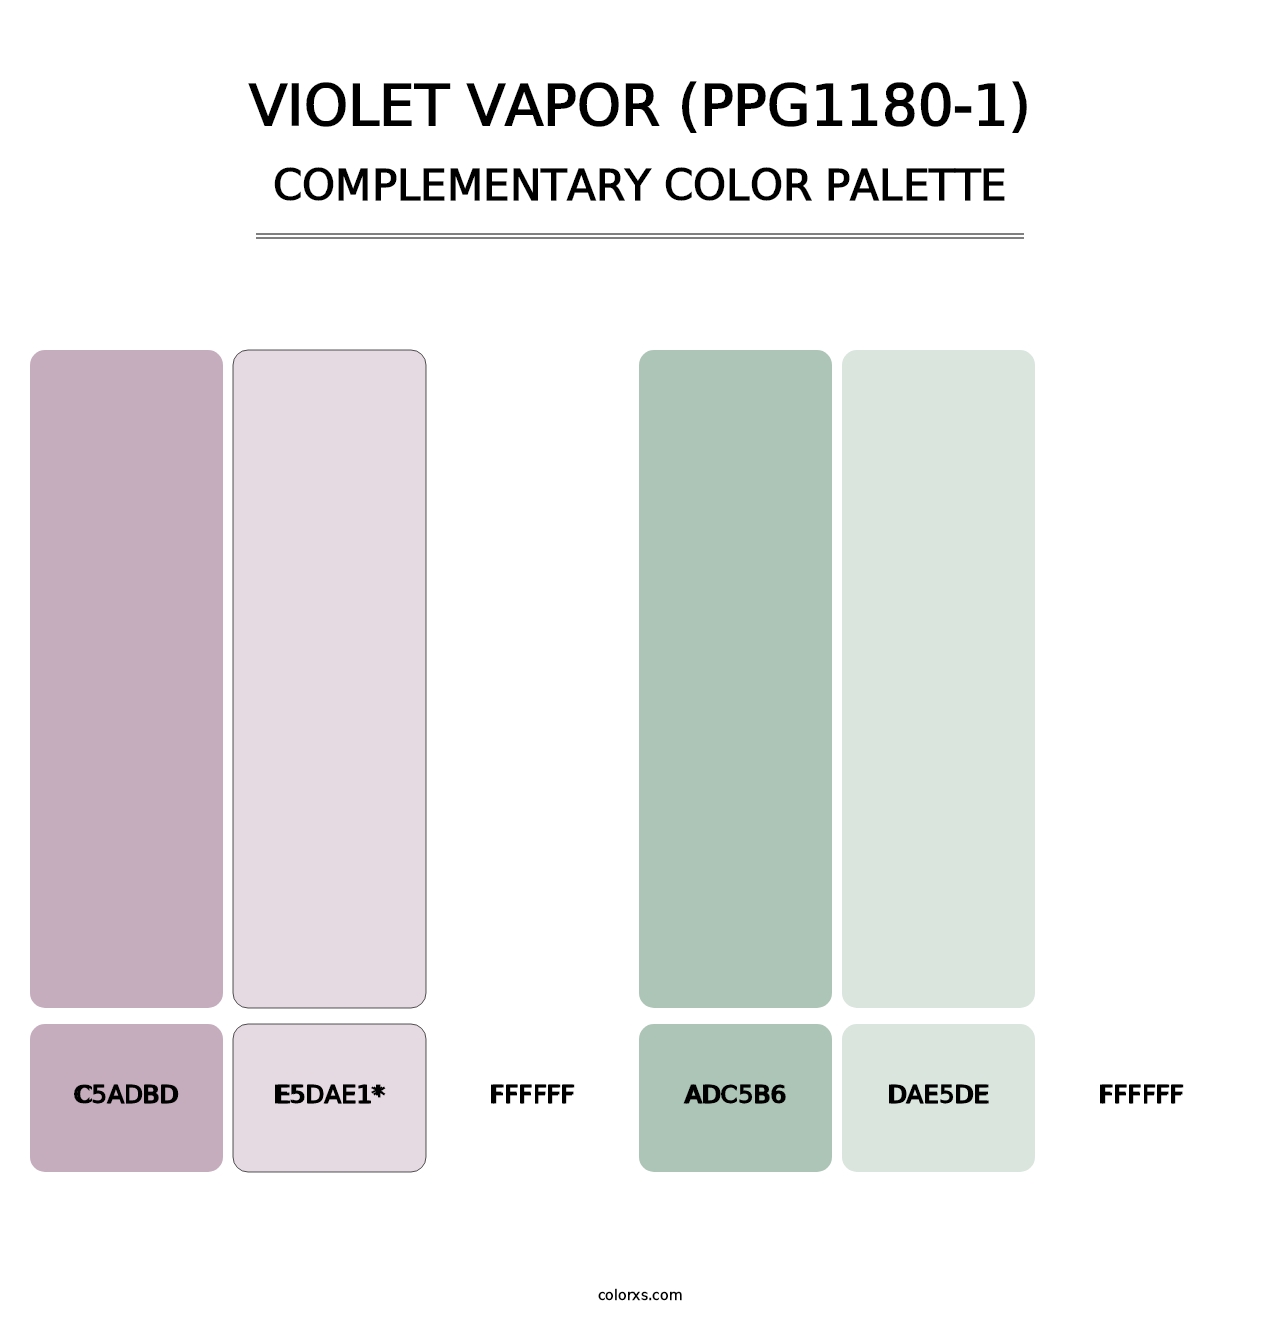 Violet Vapor (PPG1180-1) - Complementary Color Palette